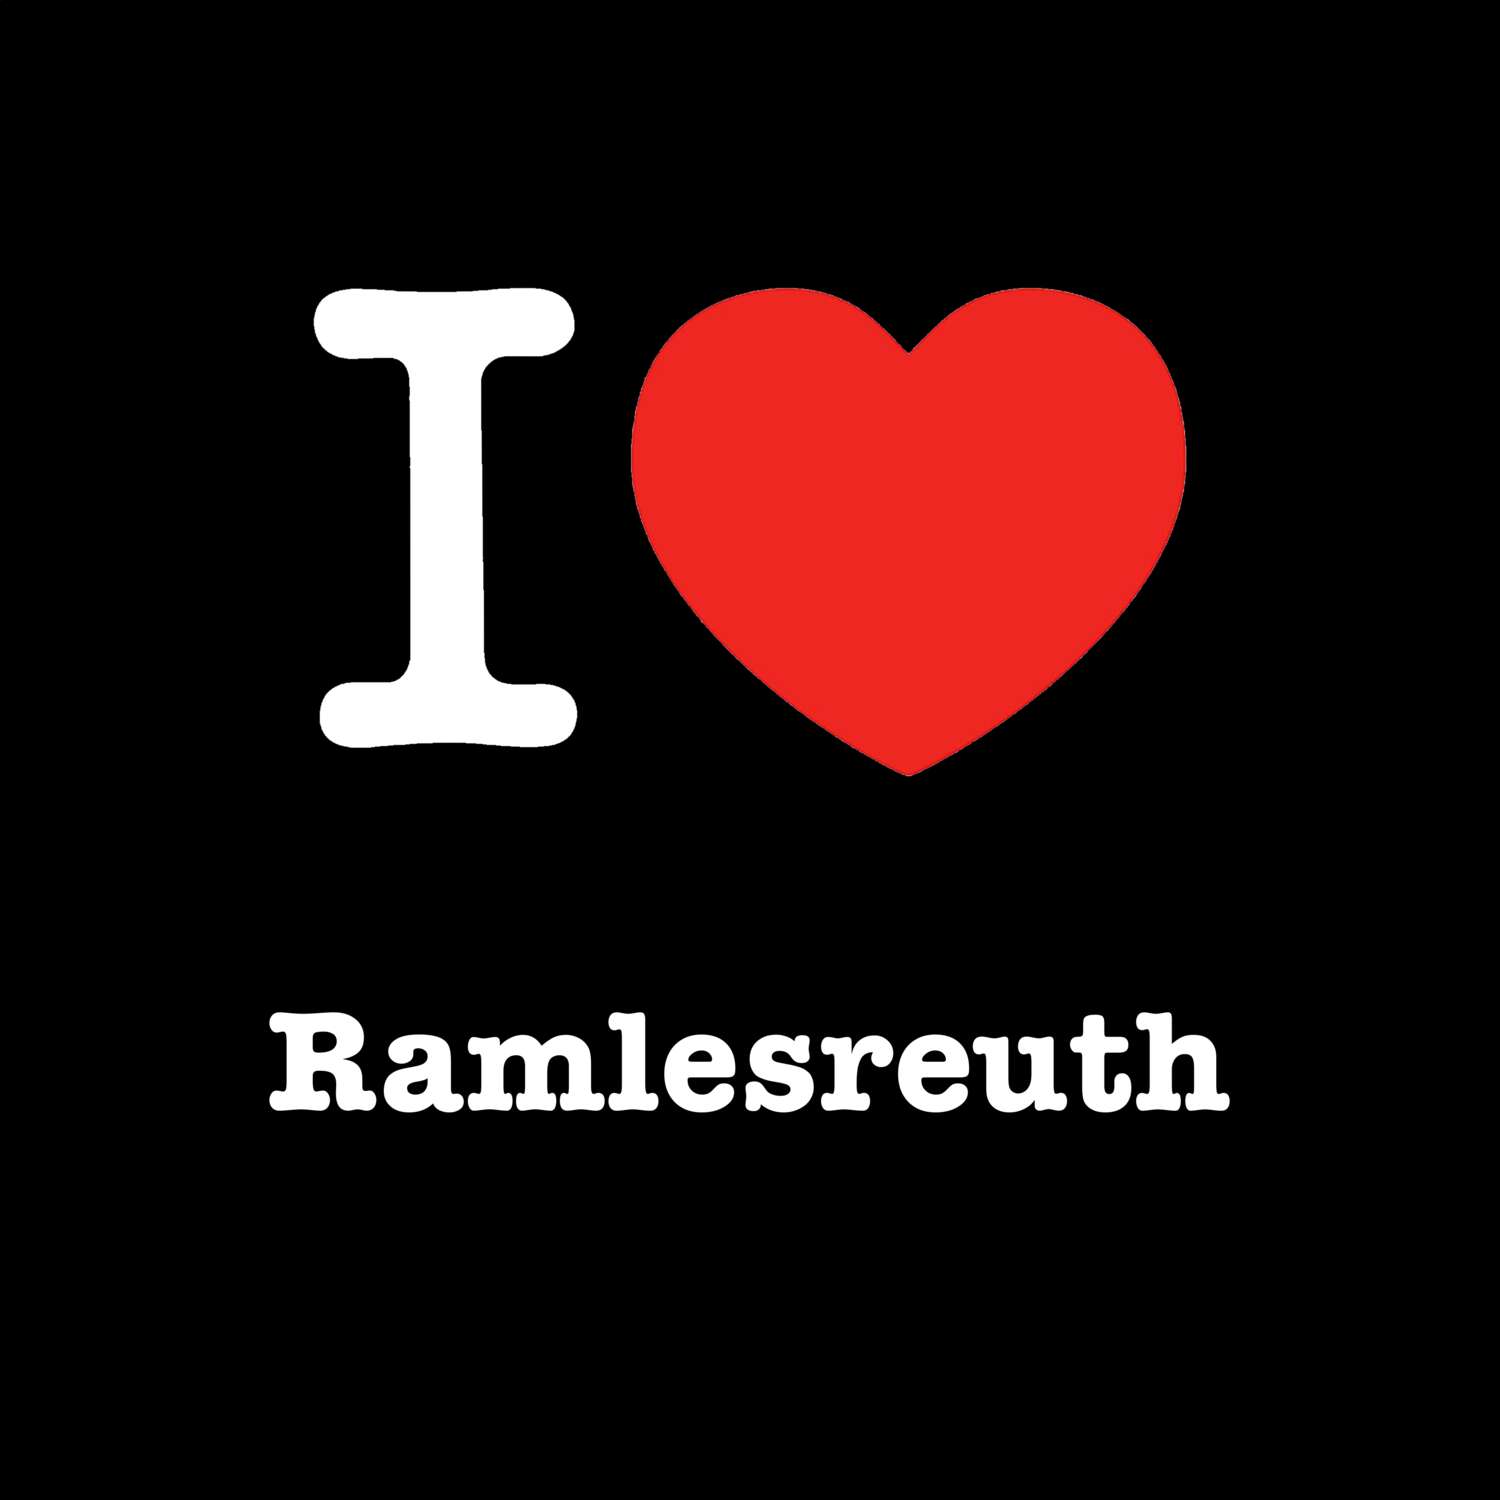 Ramlesreuth T-Shirt »I love«